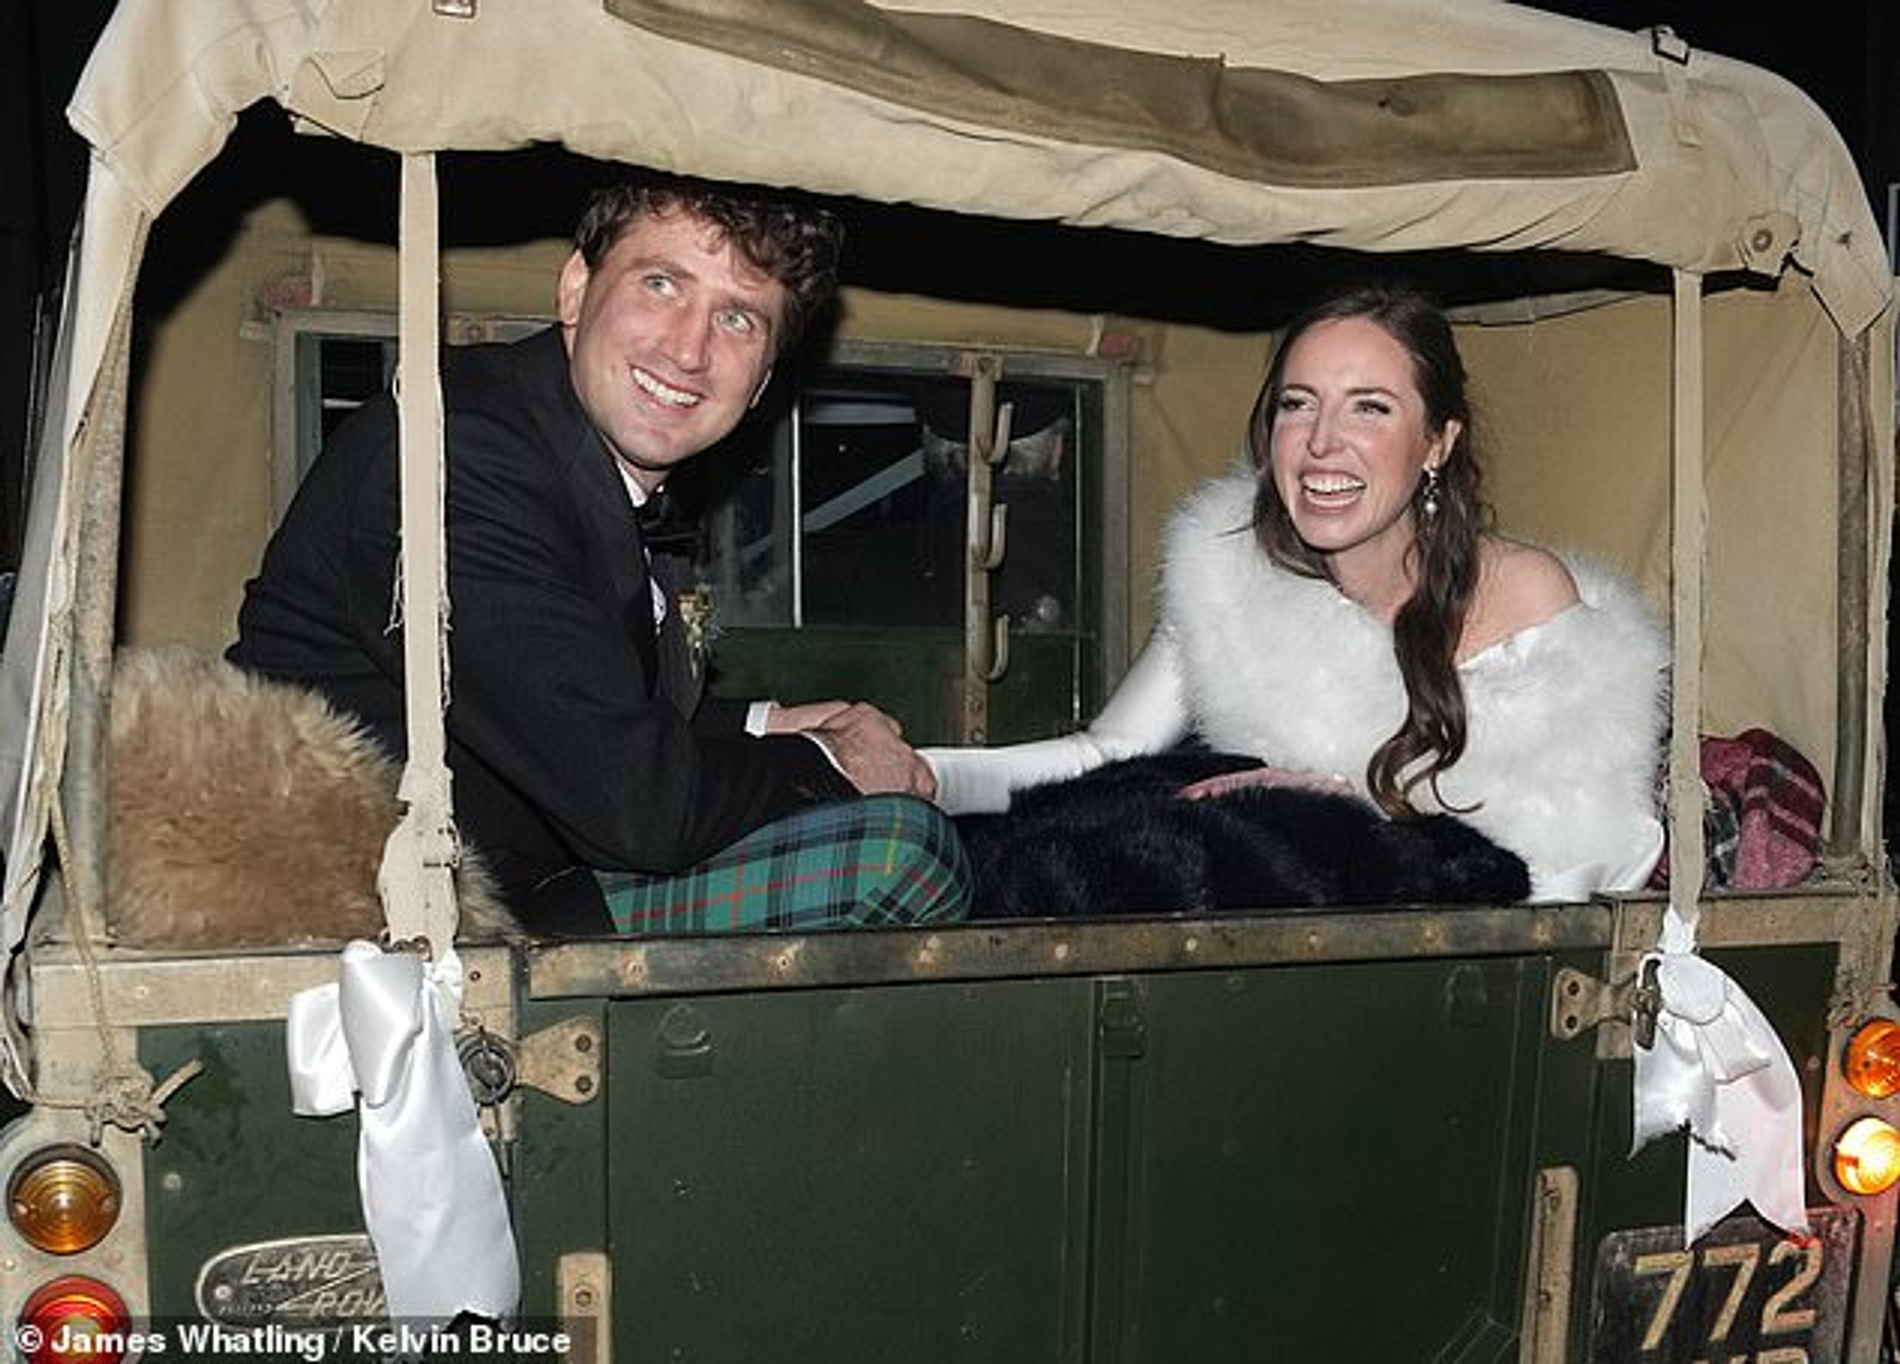 Роуз Фаркуар со своим женихом Джорджем Геммеллом
Фото: Daily Mail